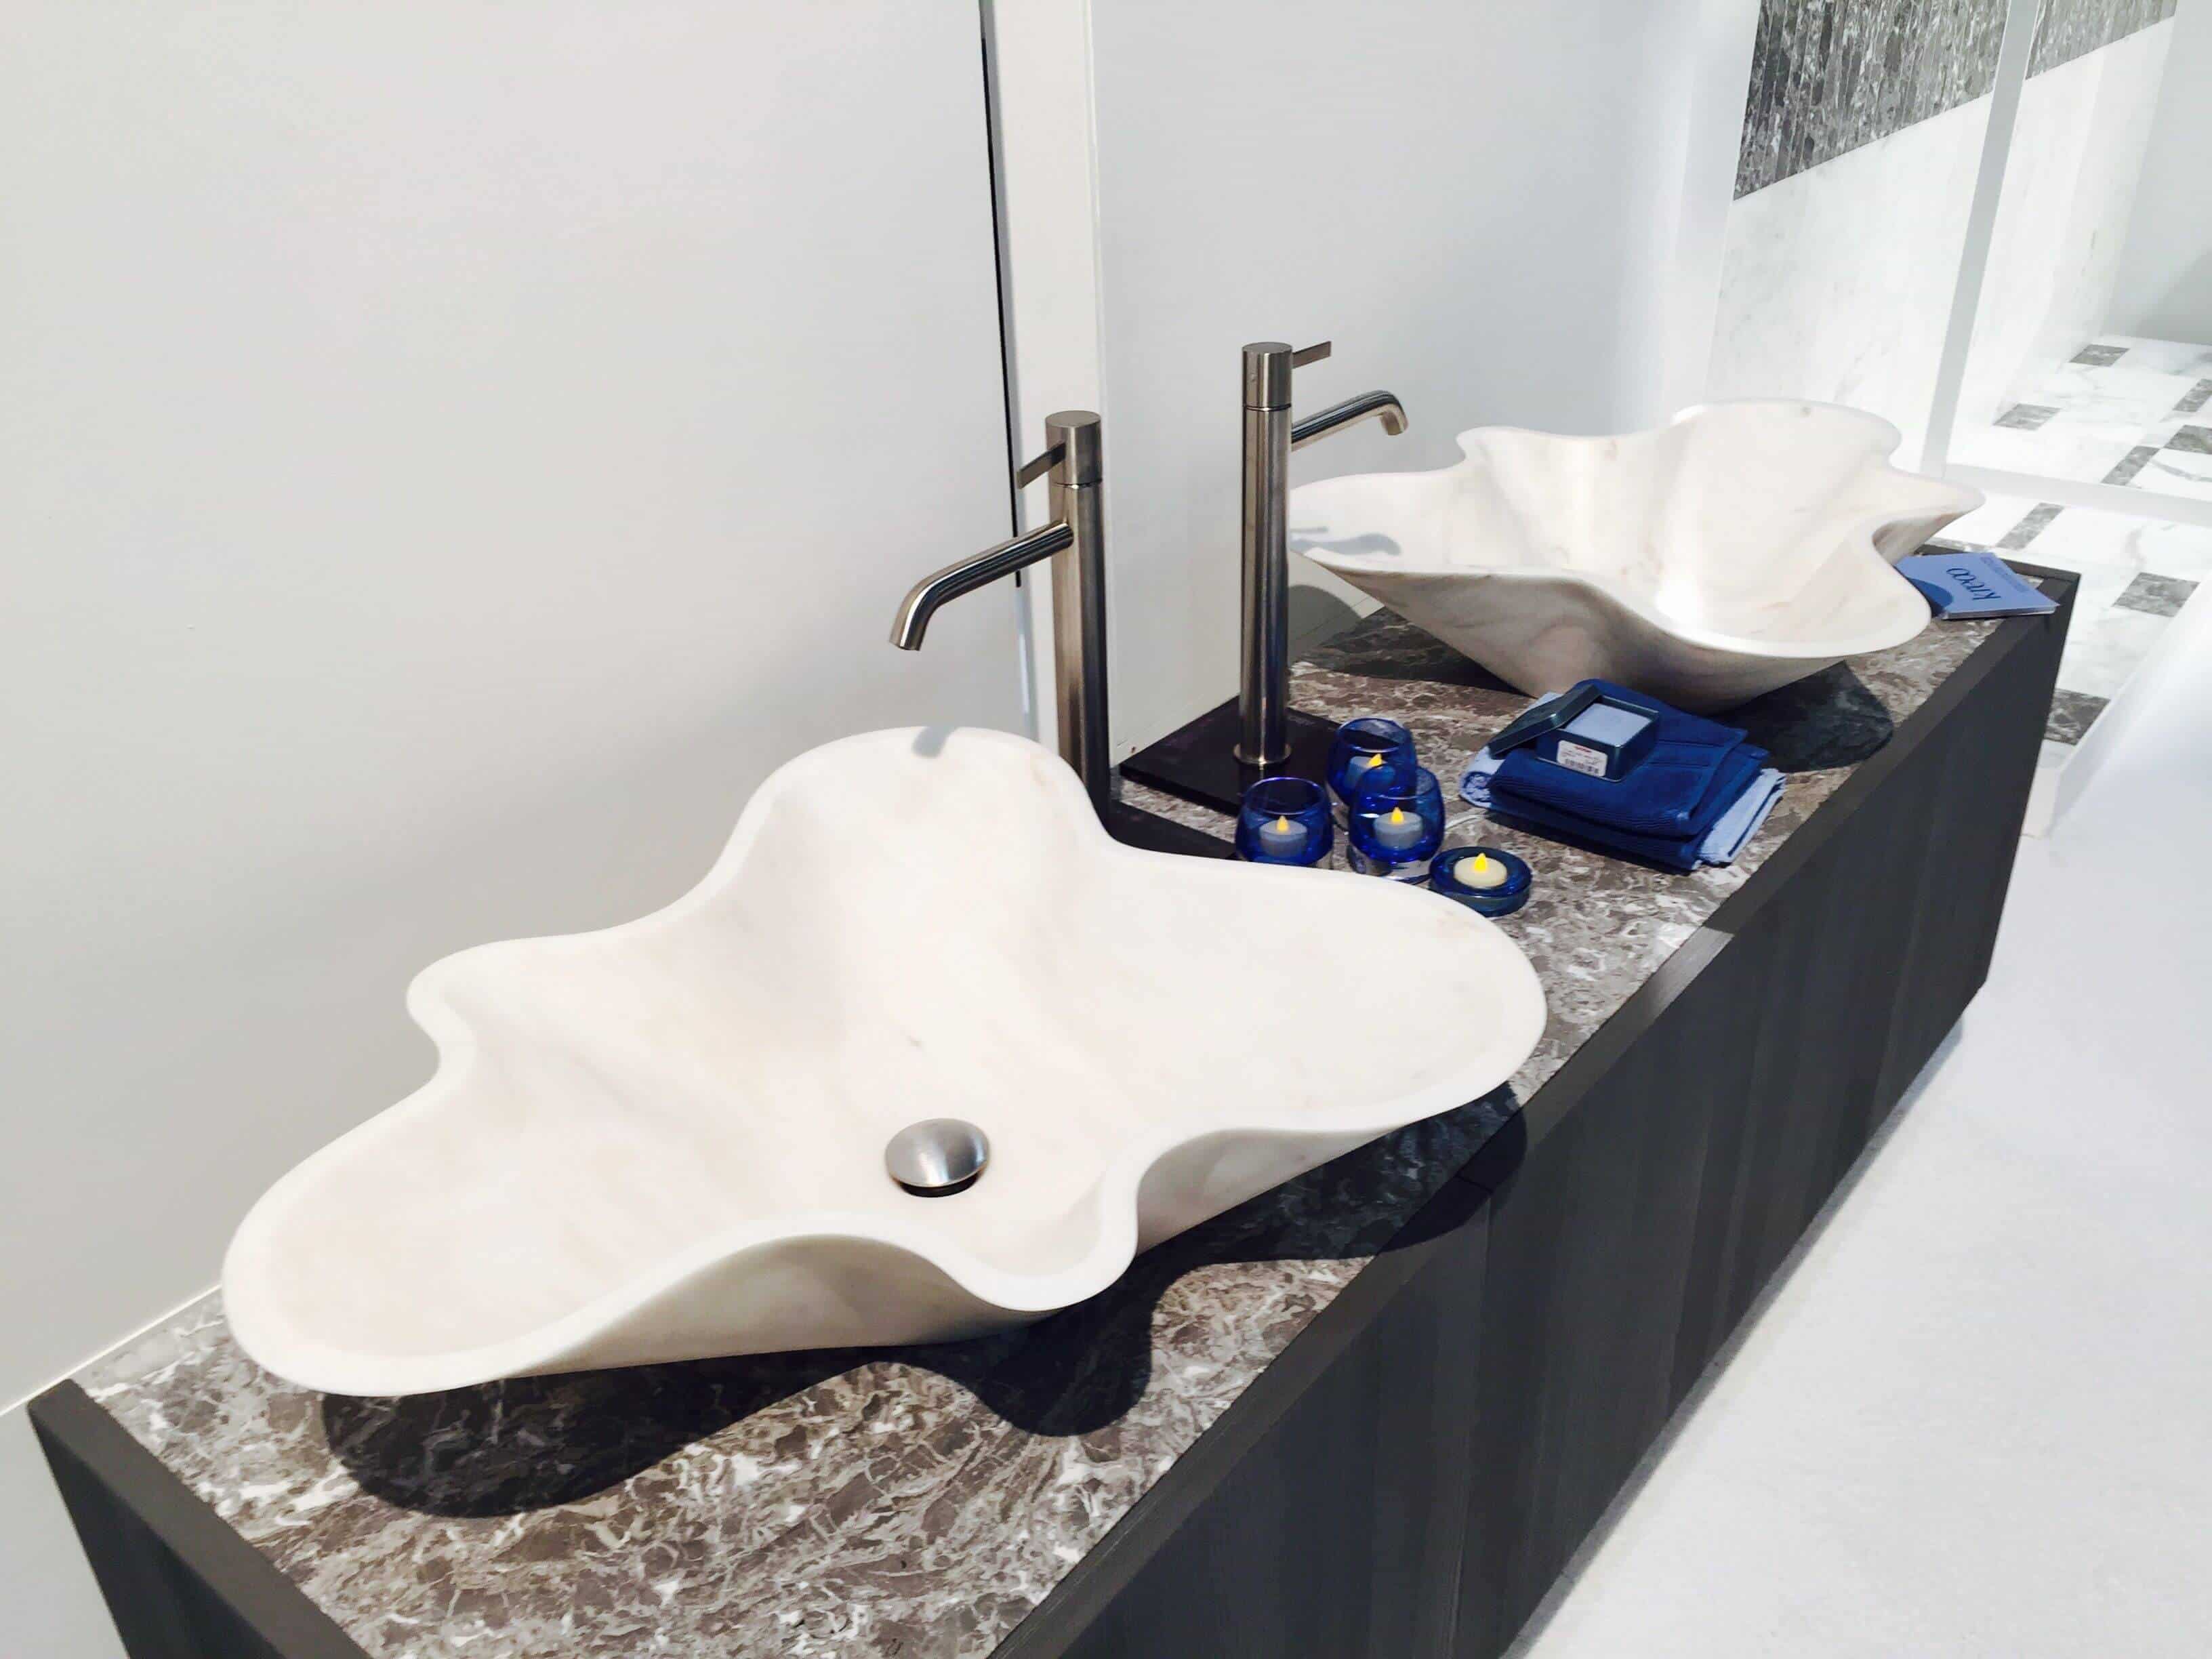 Bathroom sink design 22